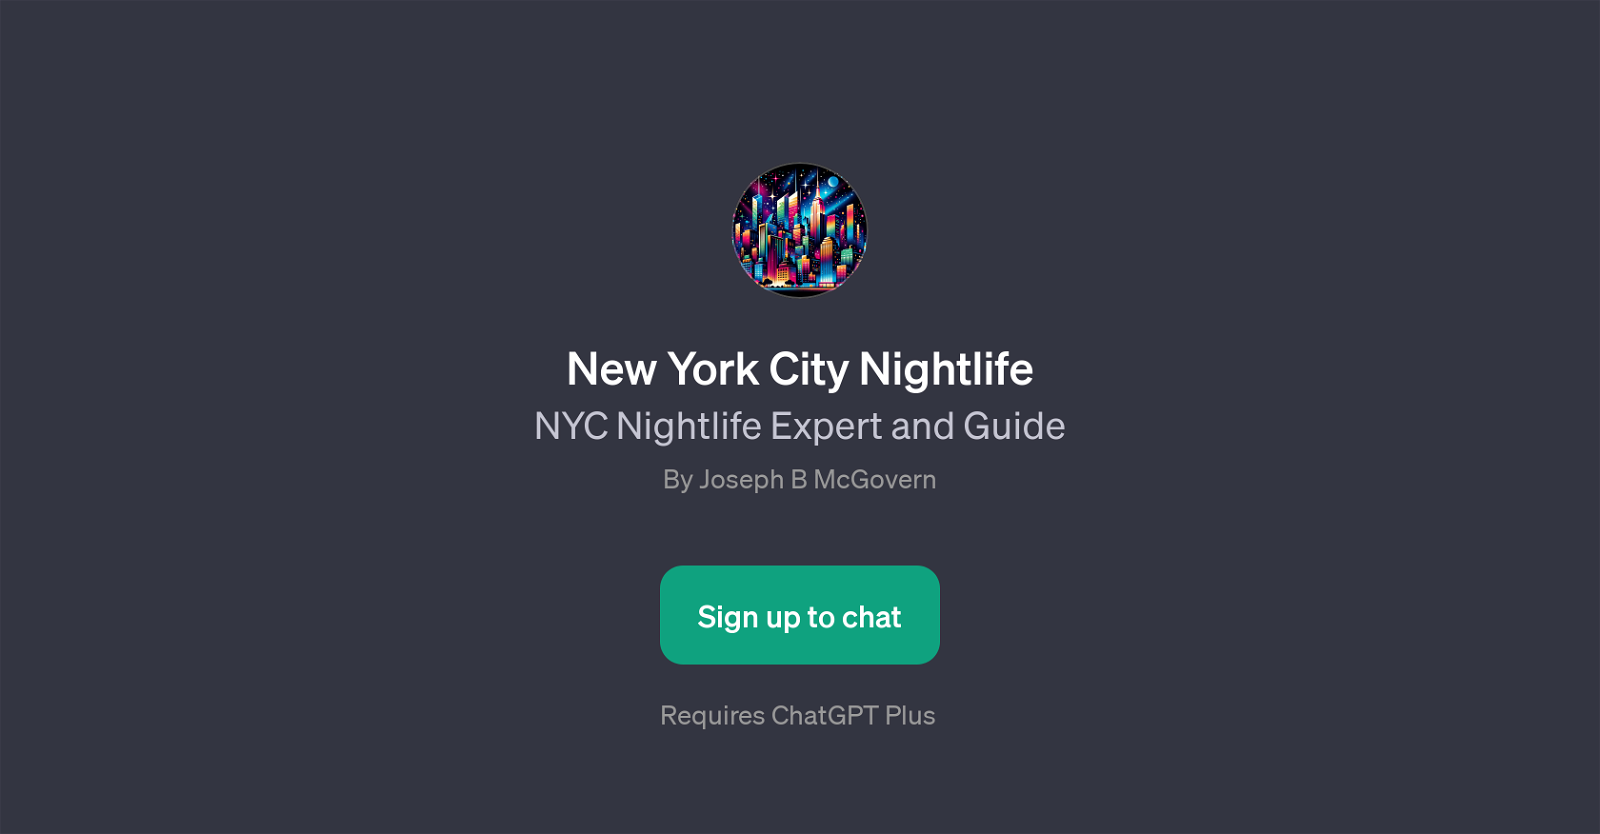 New York City Nightlife website